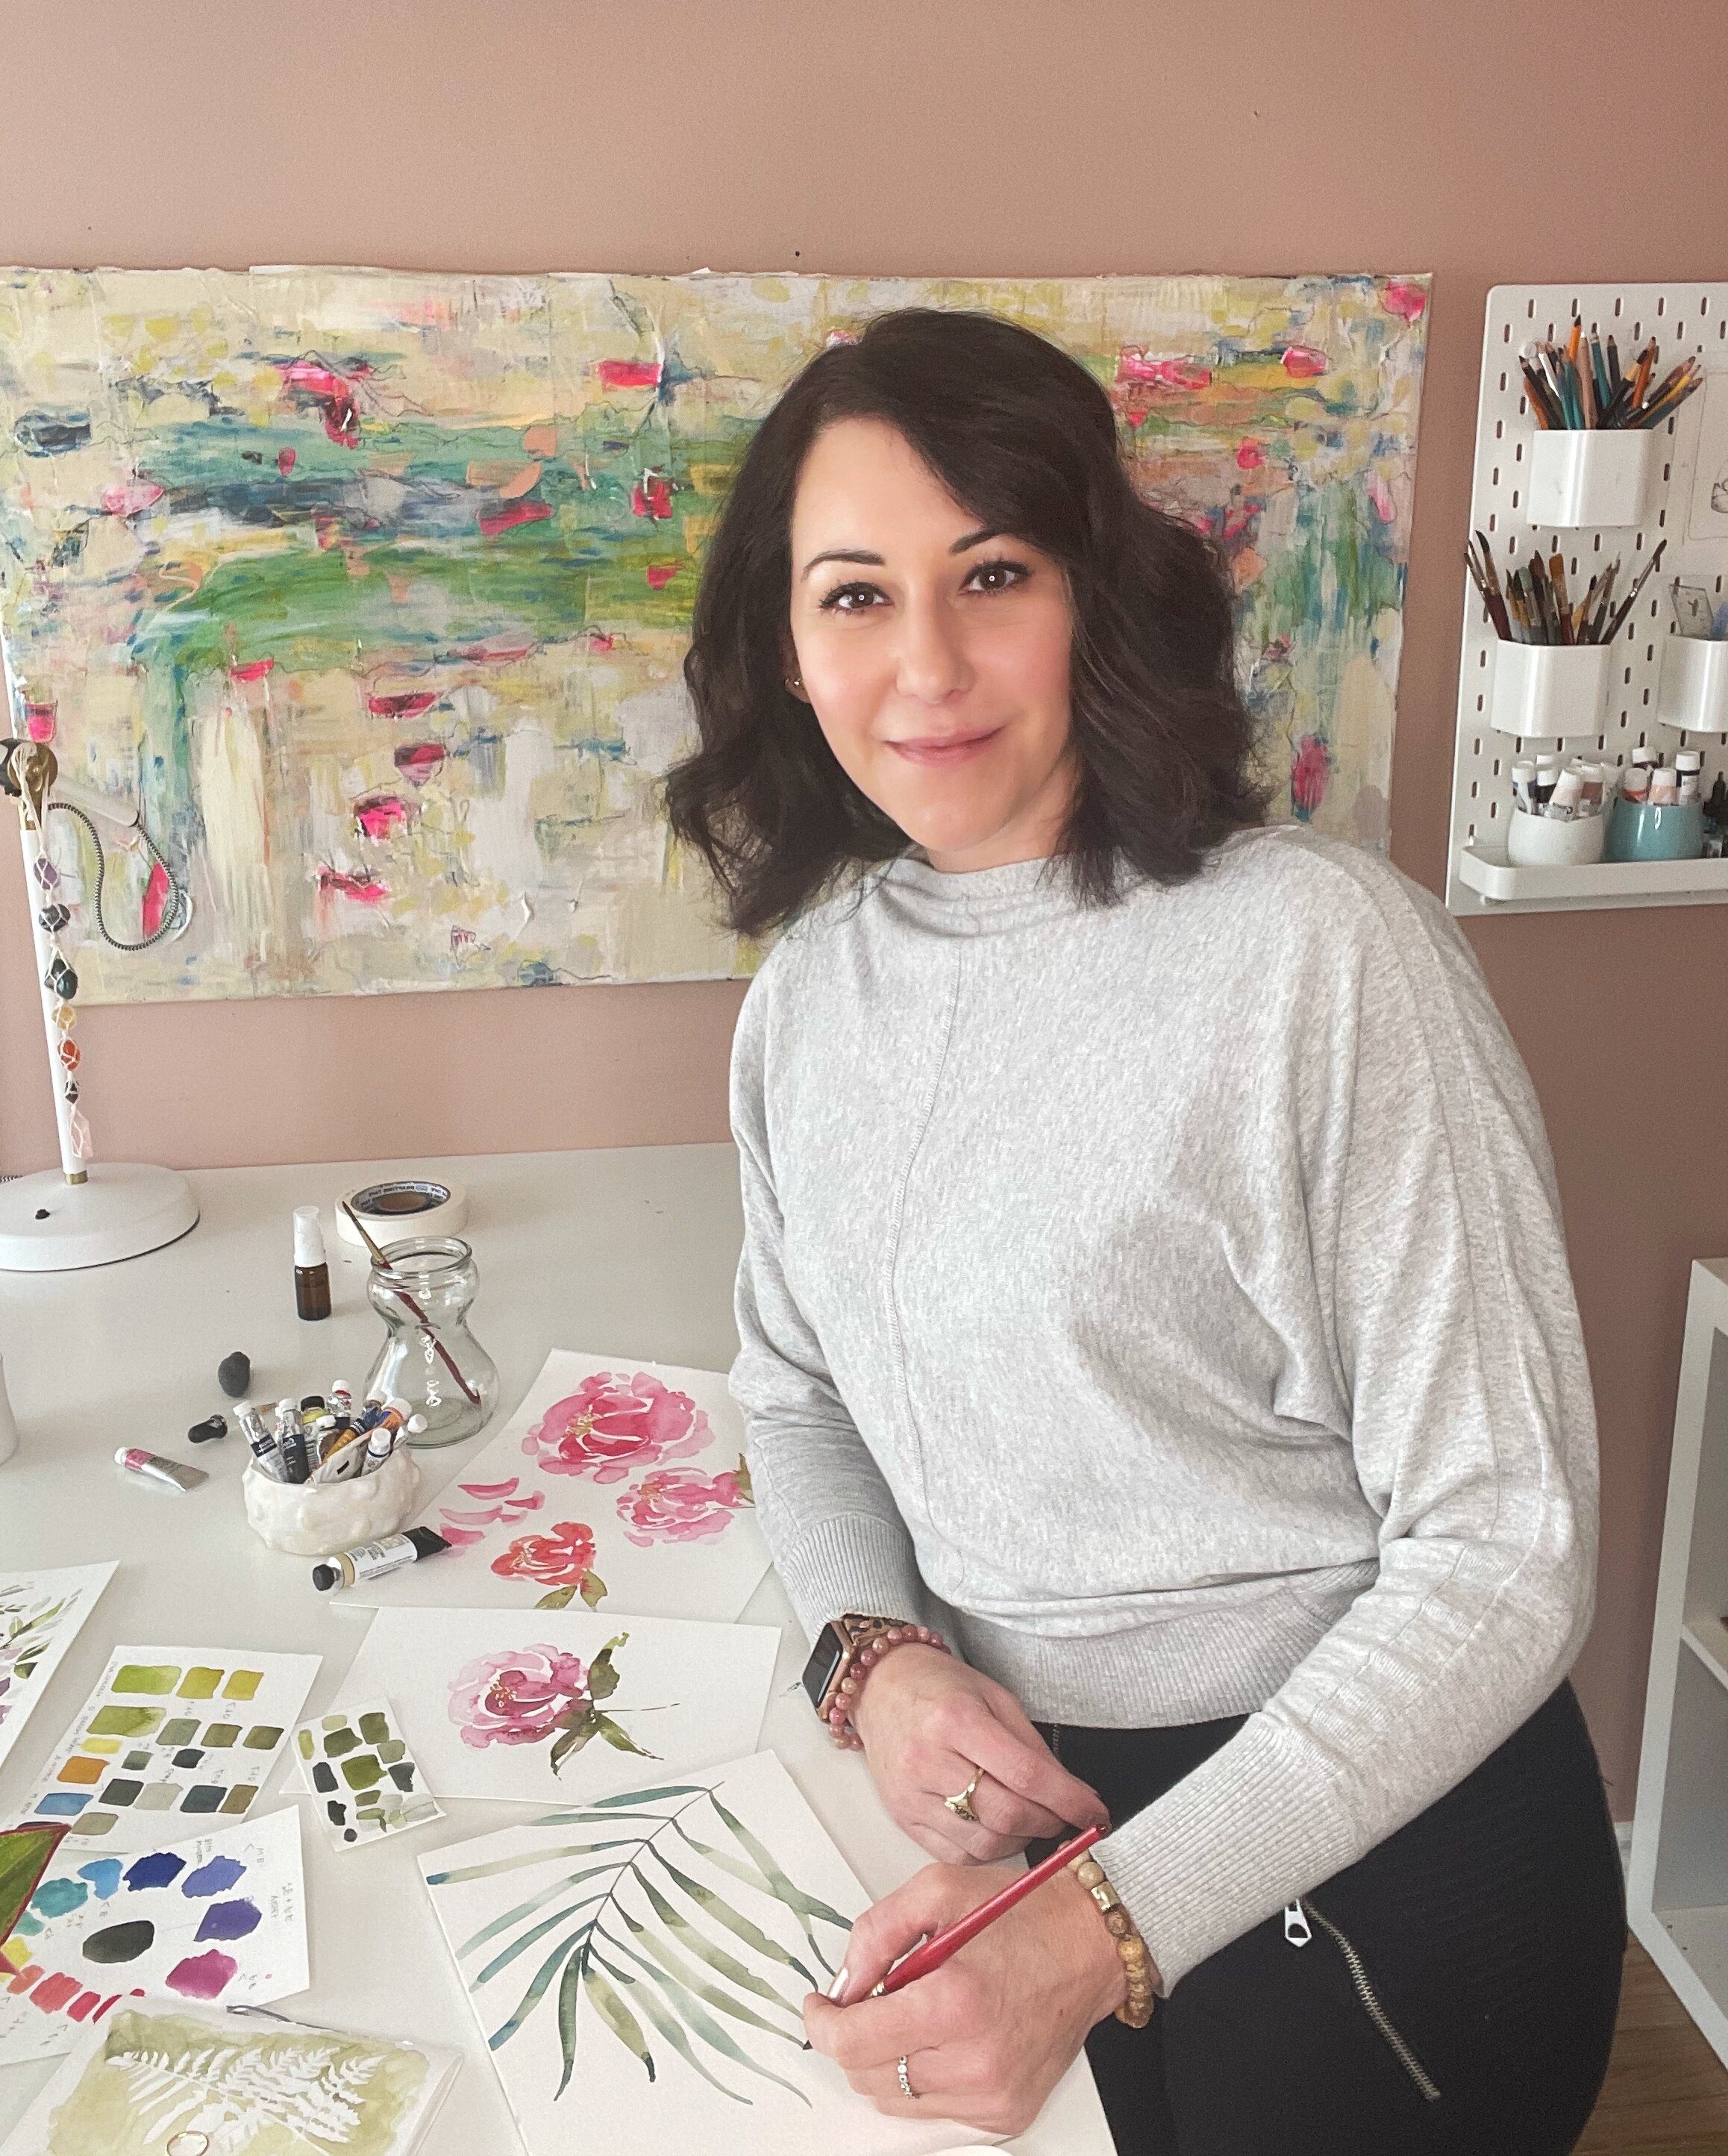 A DIY jewellery hanger that made my day! — Nicki Traikos, life i design